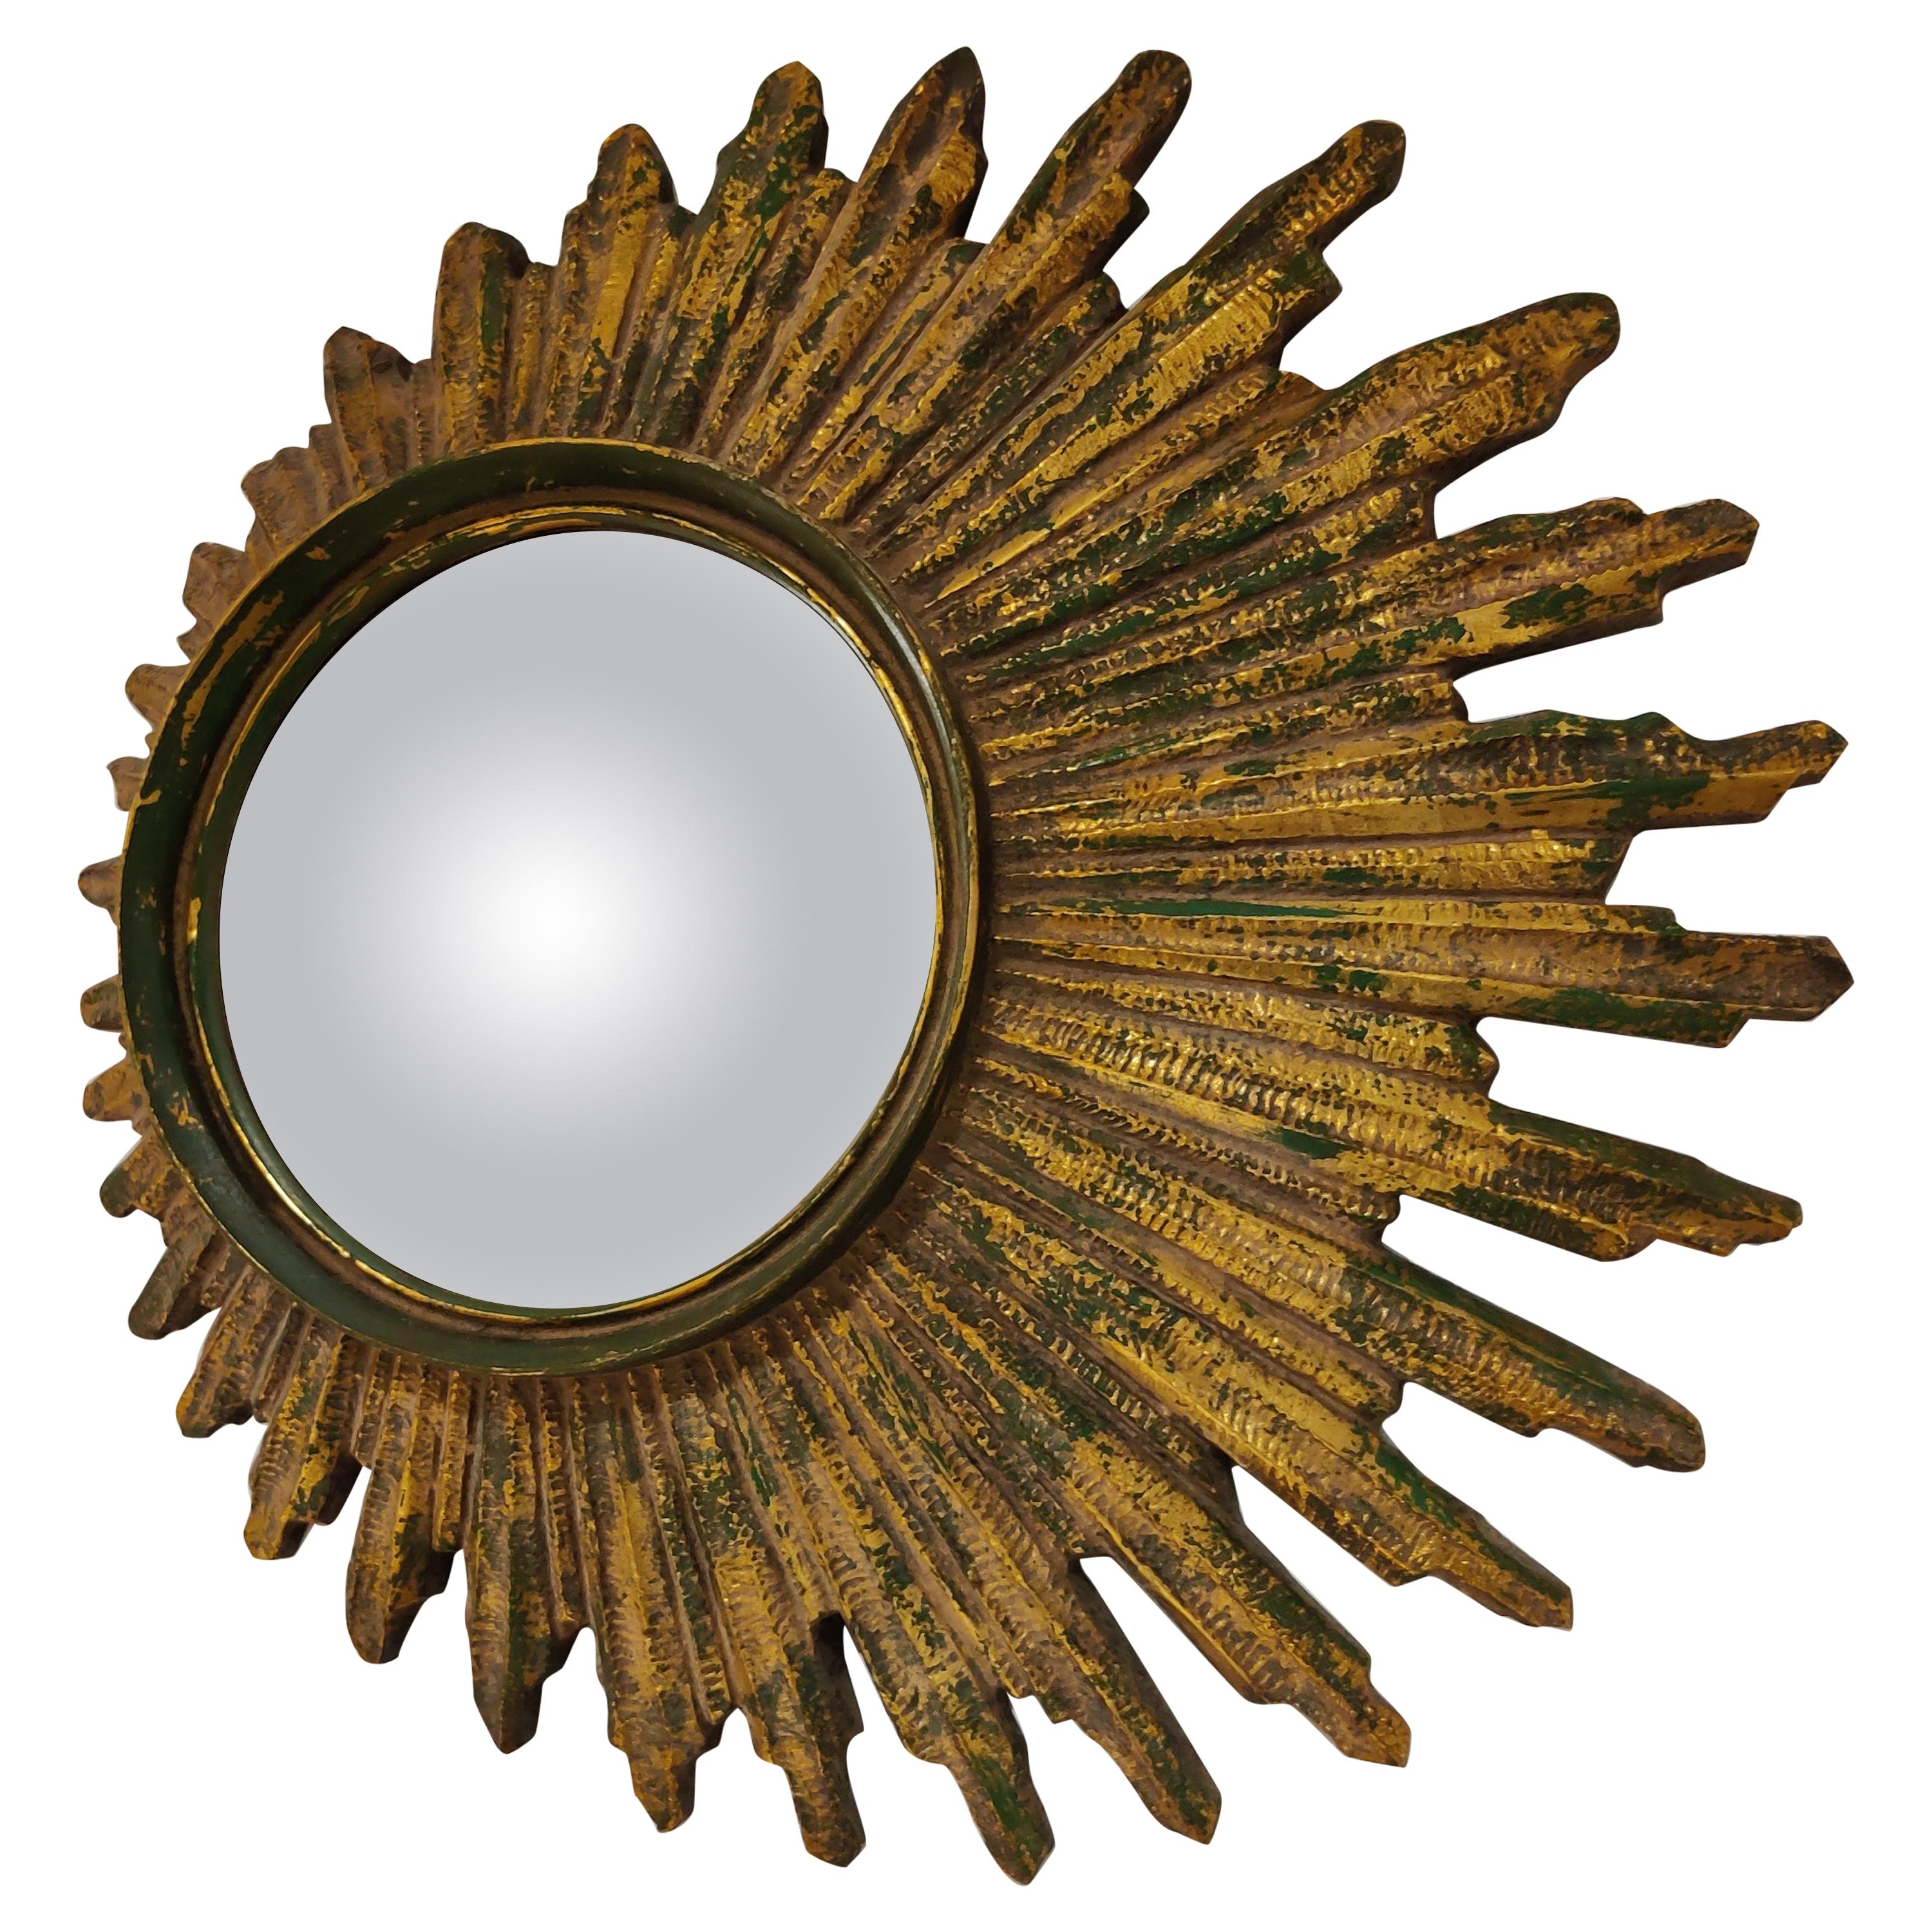 Midcentury Golden Sunburst Mirror, 1960s